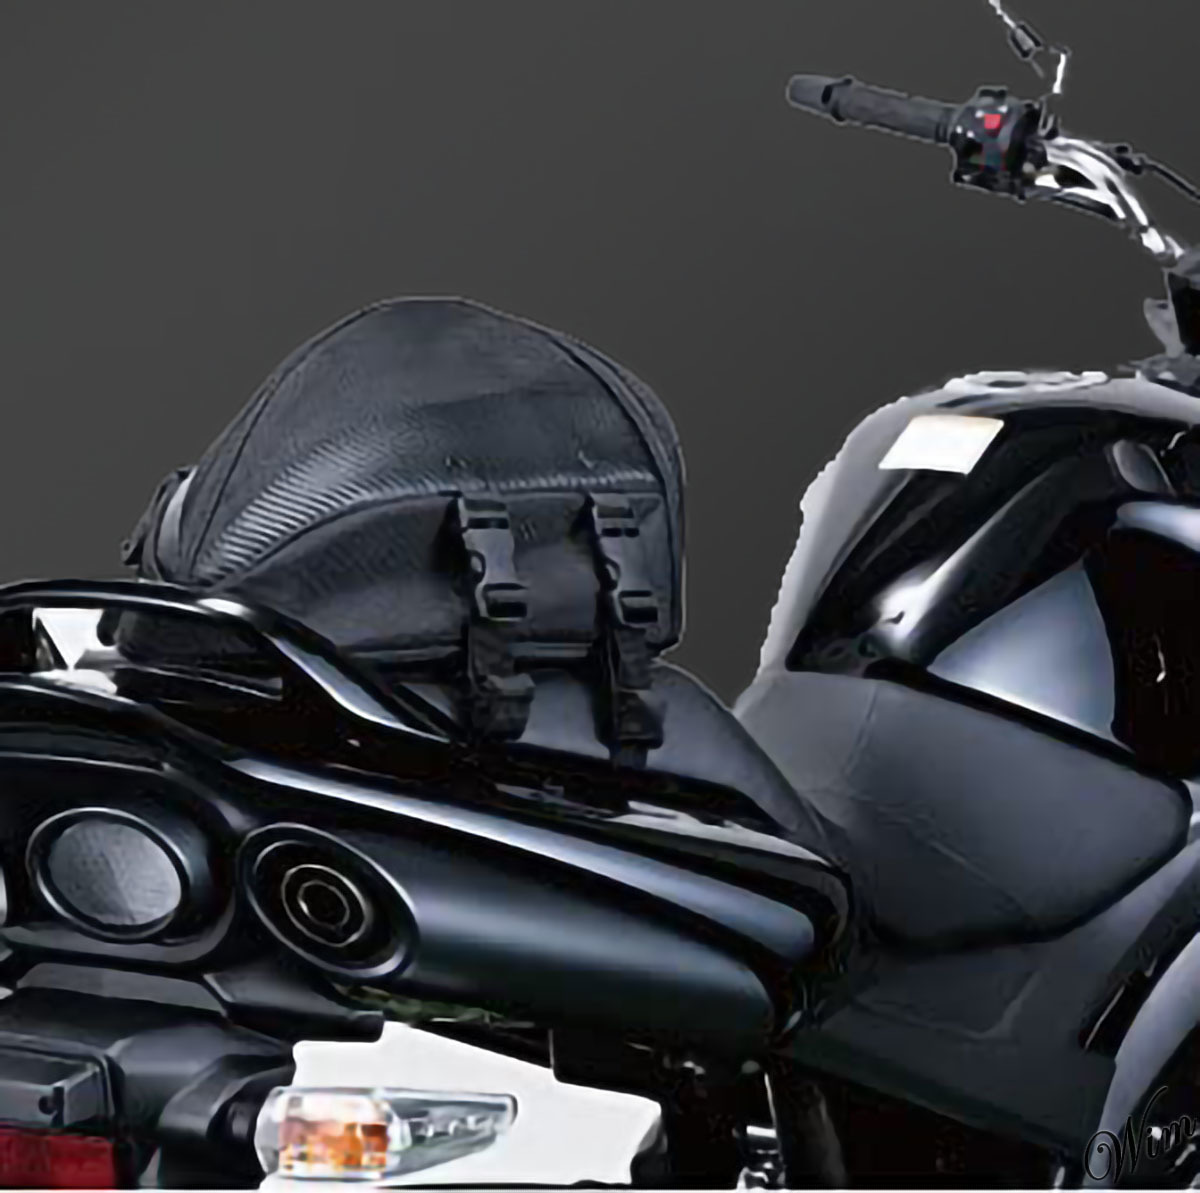 ◆H型固定ベルト◆ シートバッグ 容量5.5L 大型開口部 レインカバー コンパクト 取り付け簡単 バイク オートバイ ツーリング 旅行